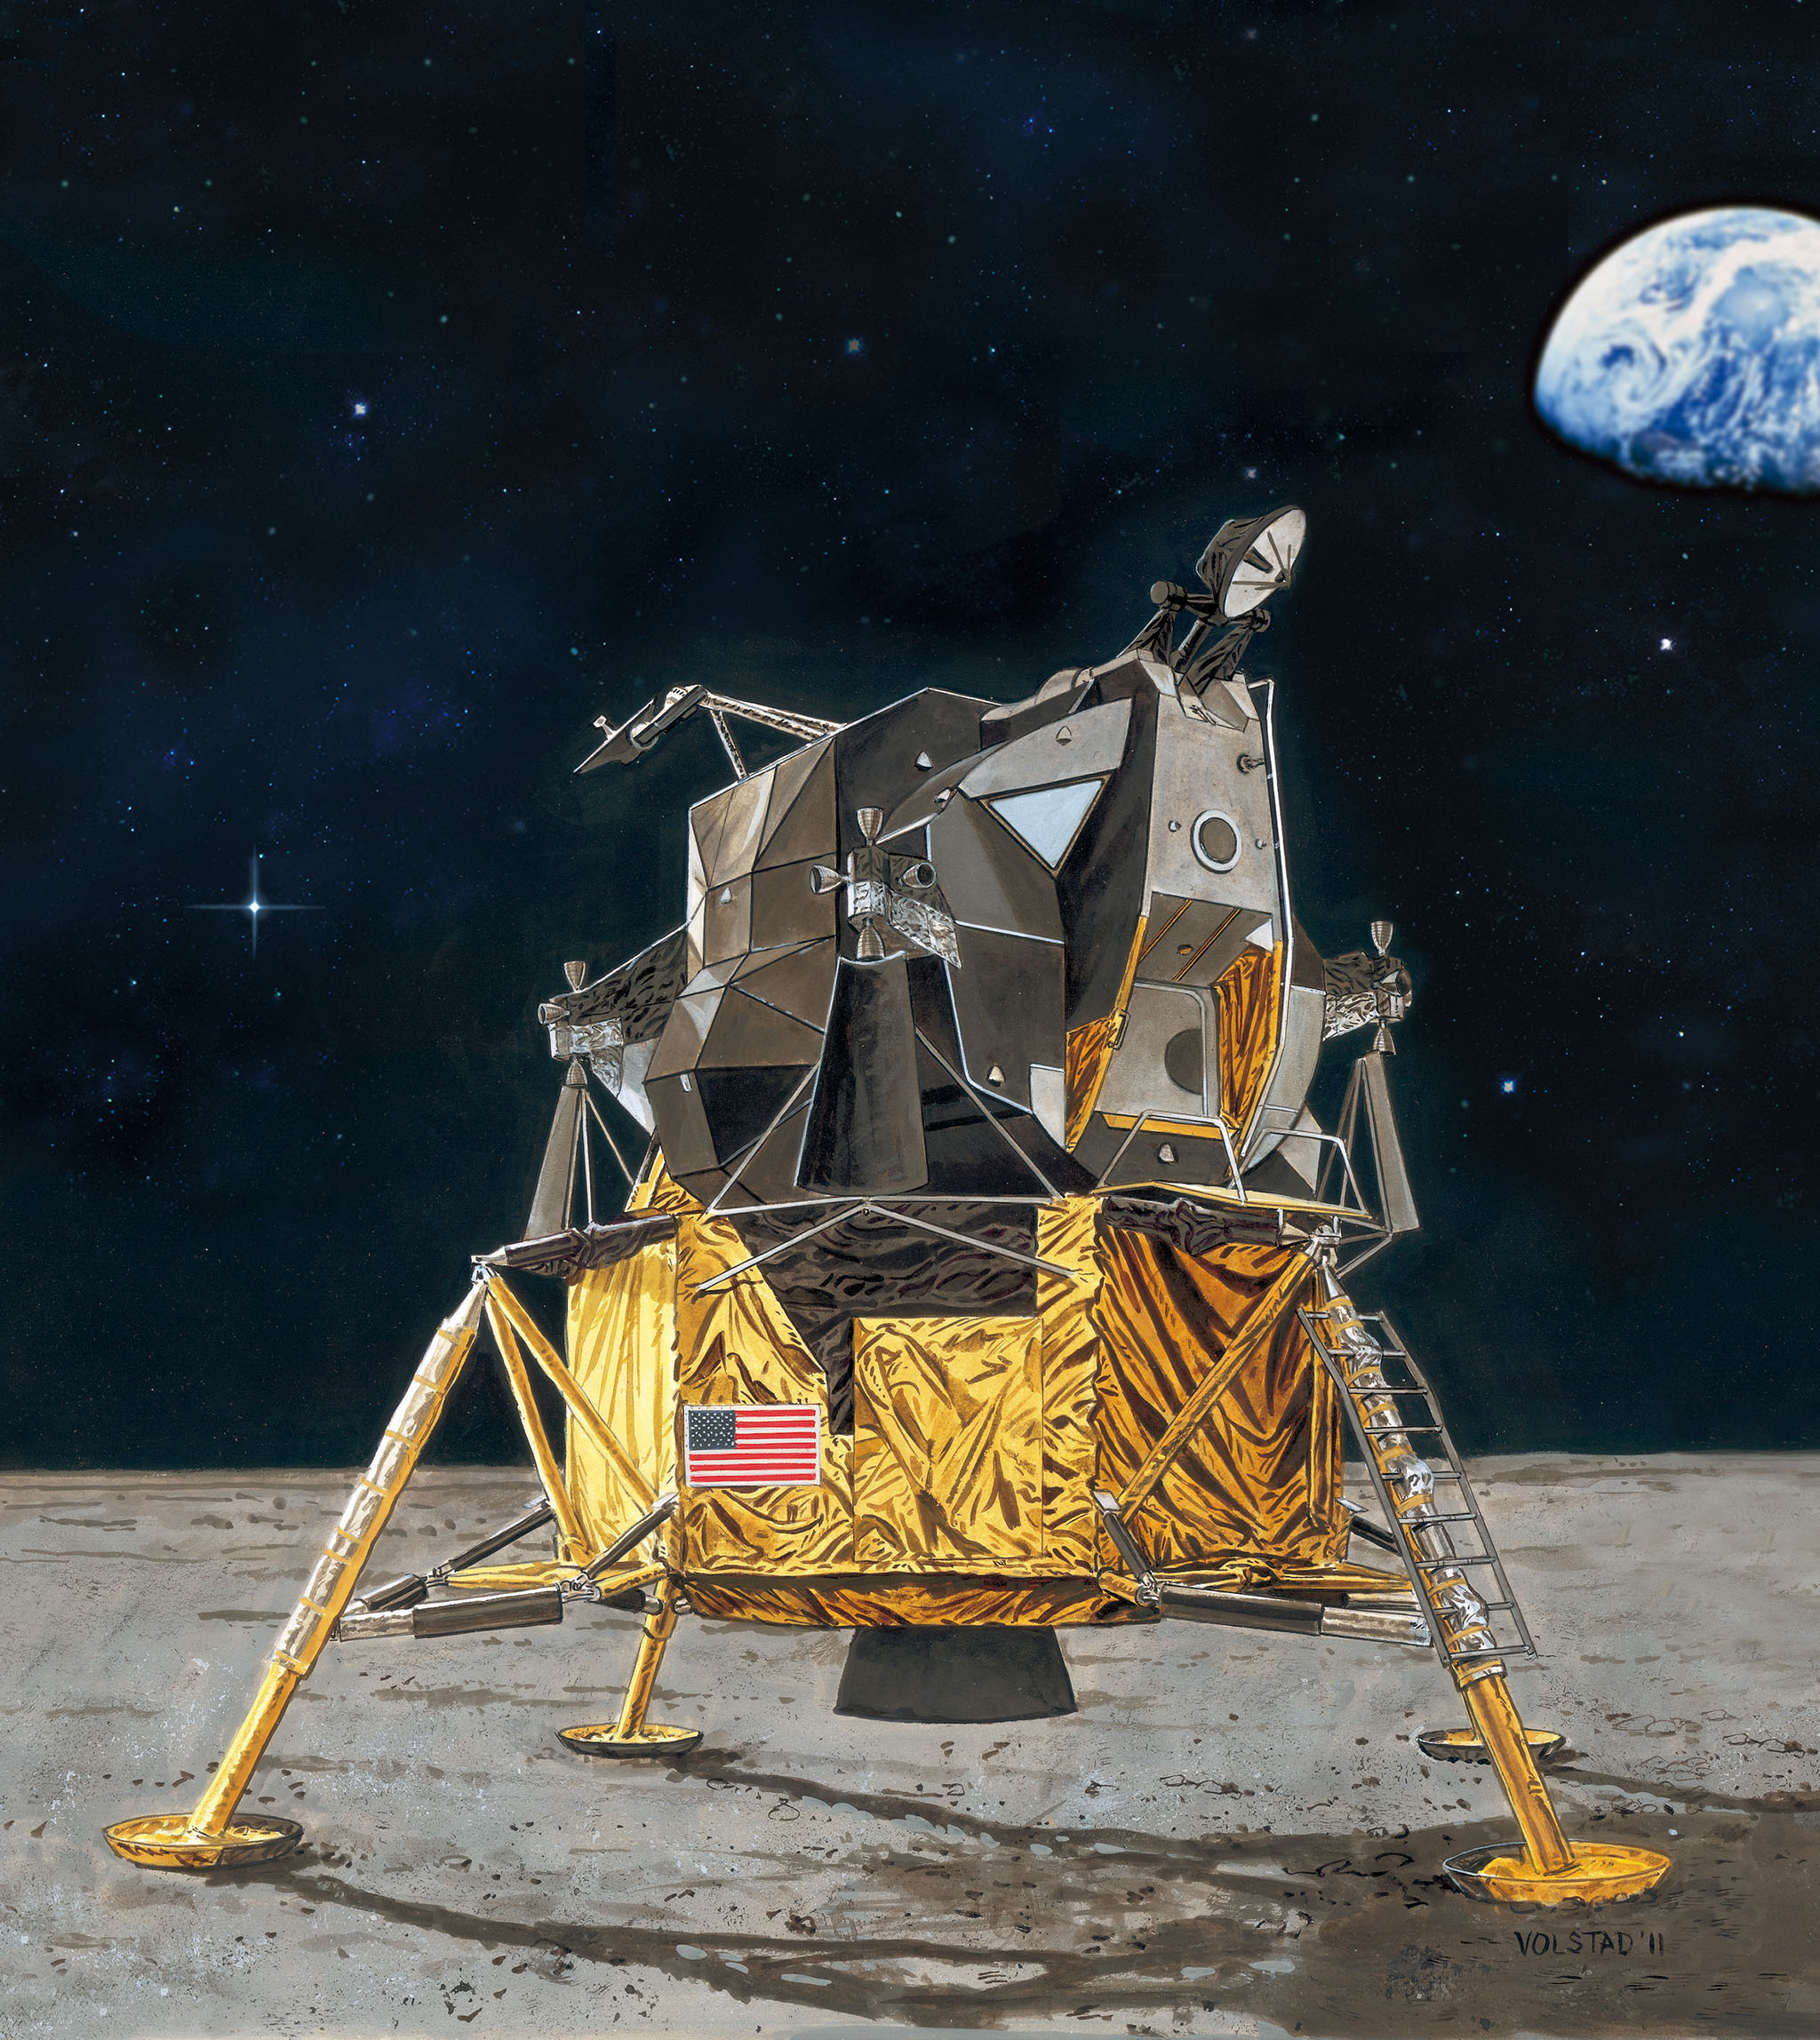 REVELL Module 11 Eagle Apollo Mehrfarbig Lunar Bausatz,